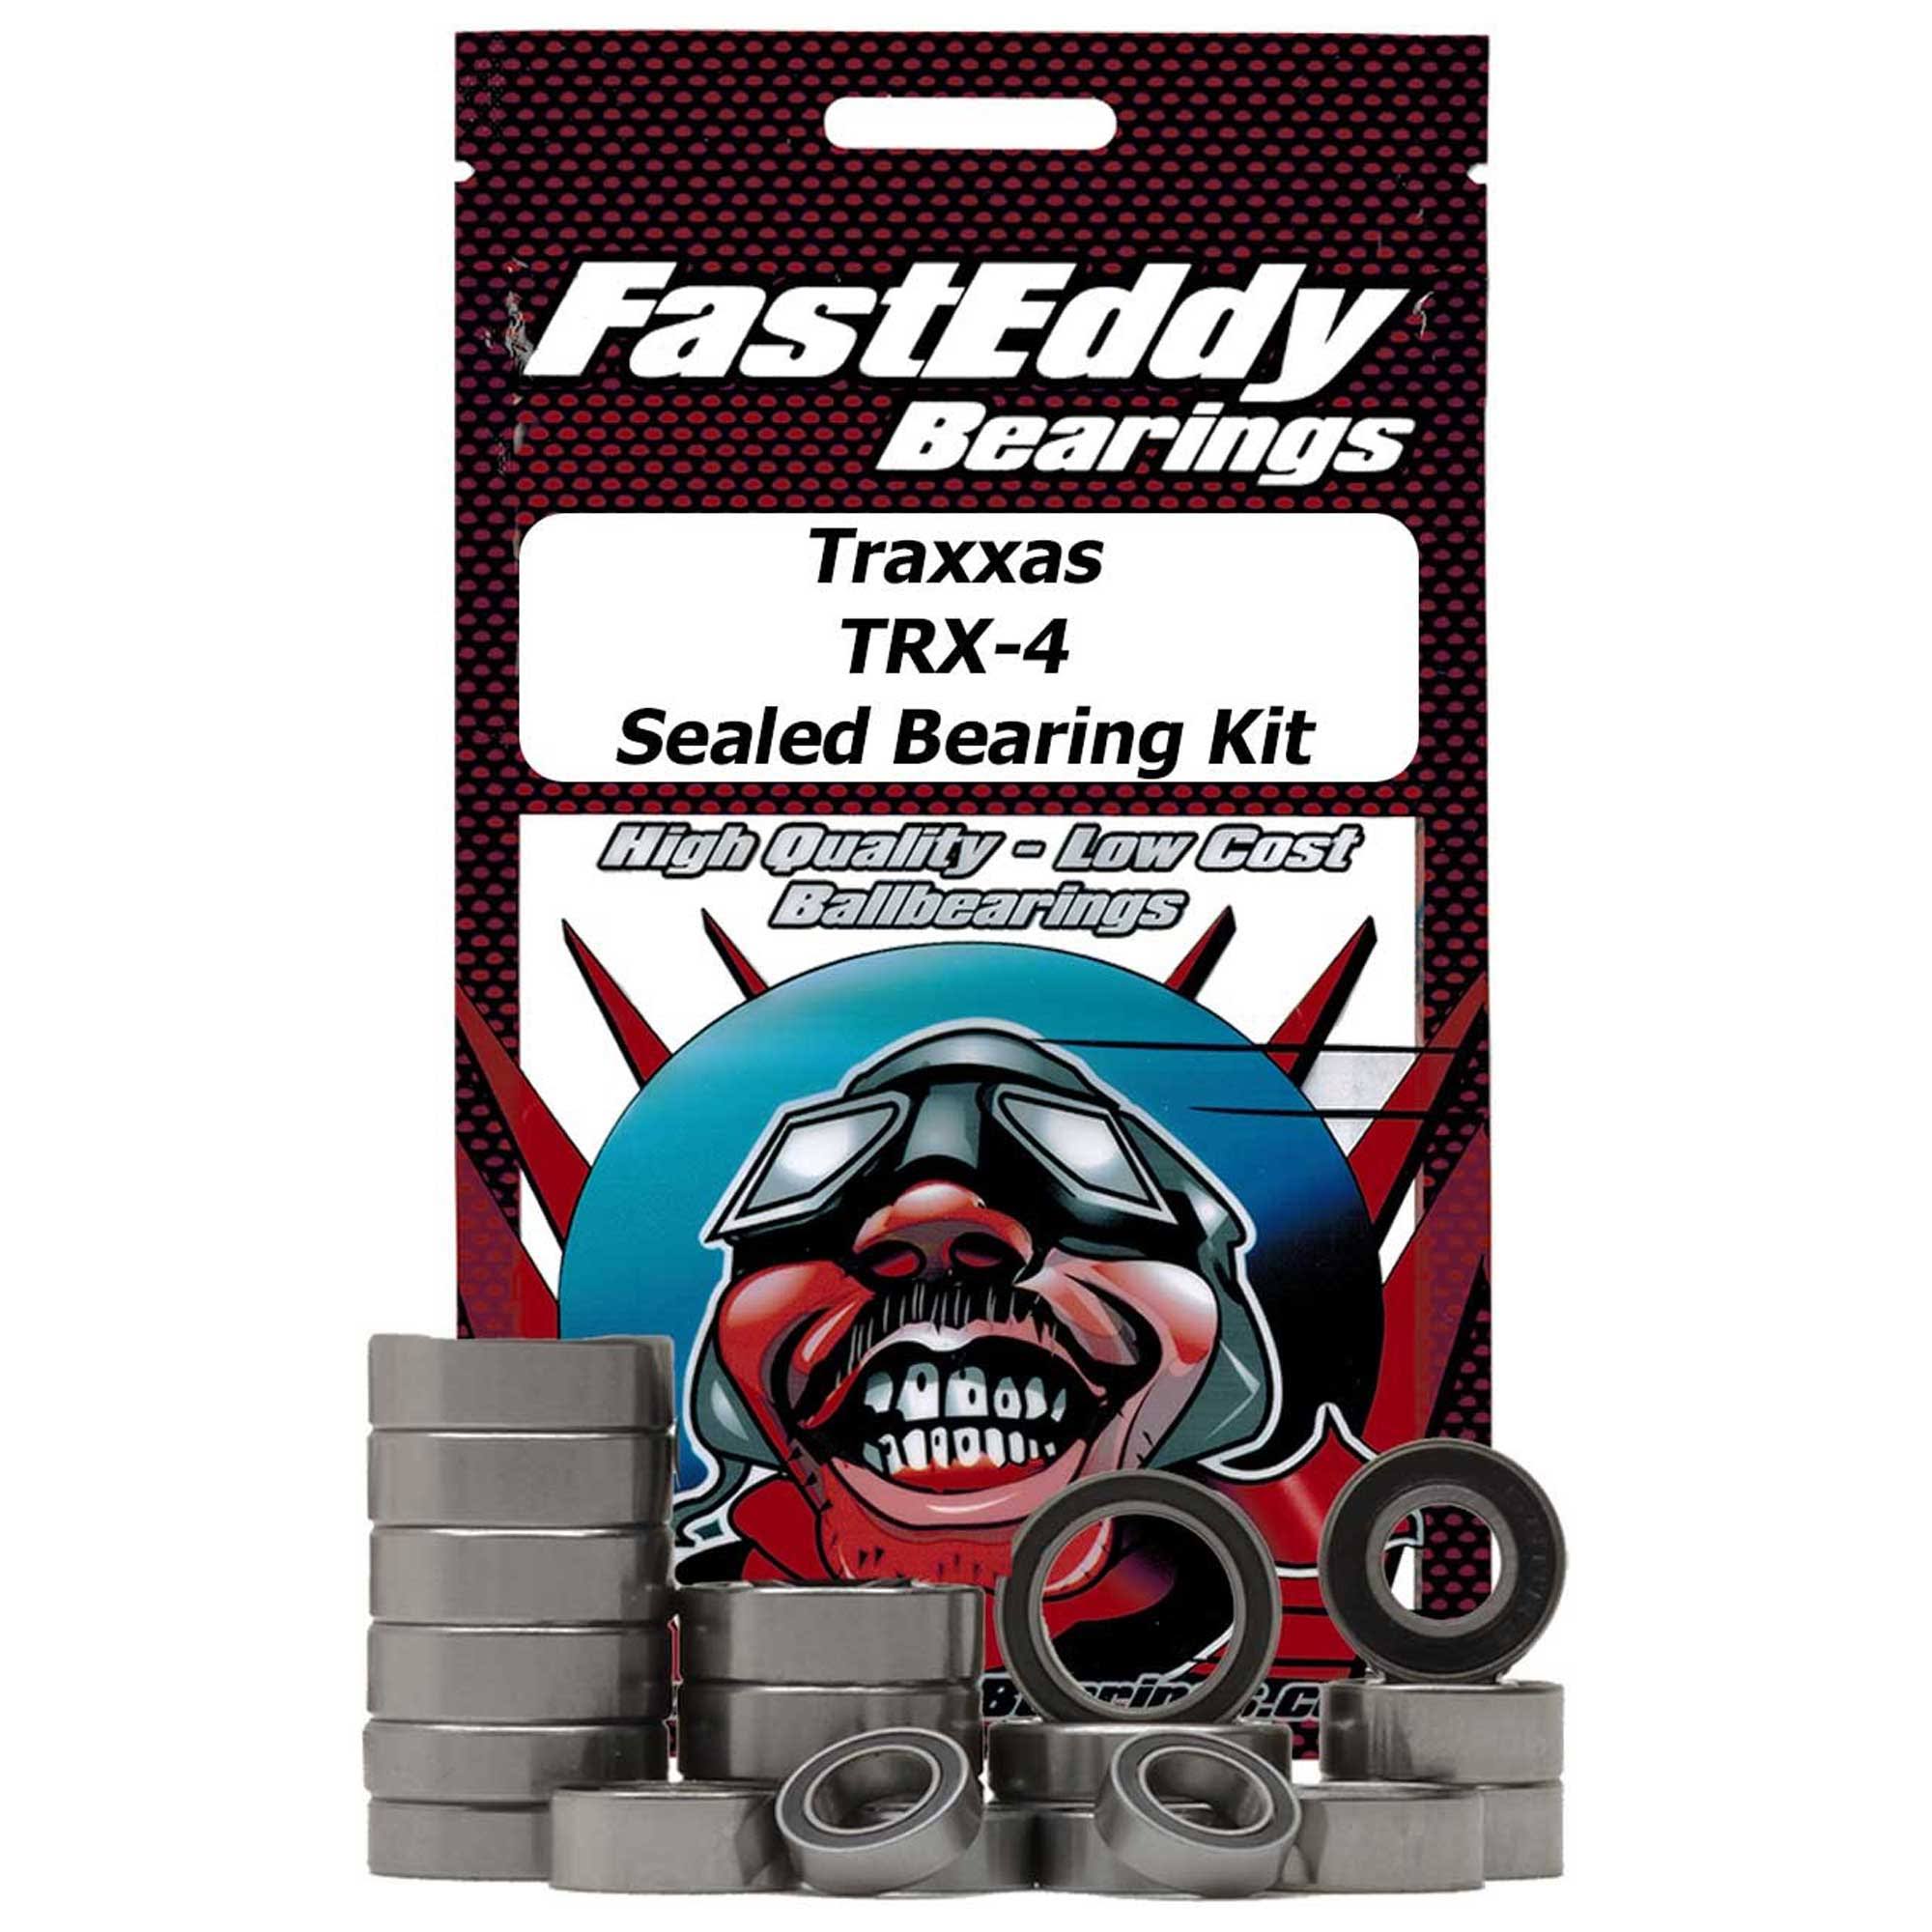 FastEddy Tfe4522 - Sealed Bearing Kit - Traxxas TRX-4